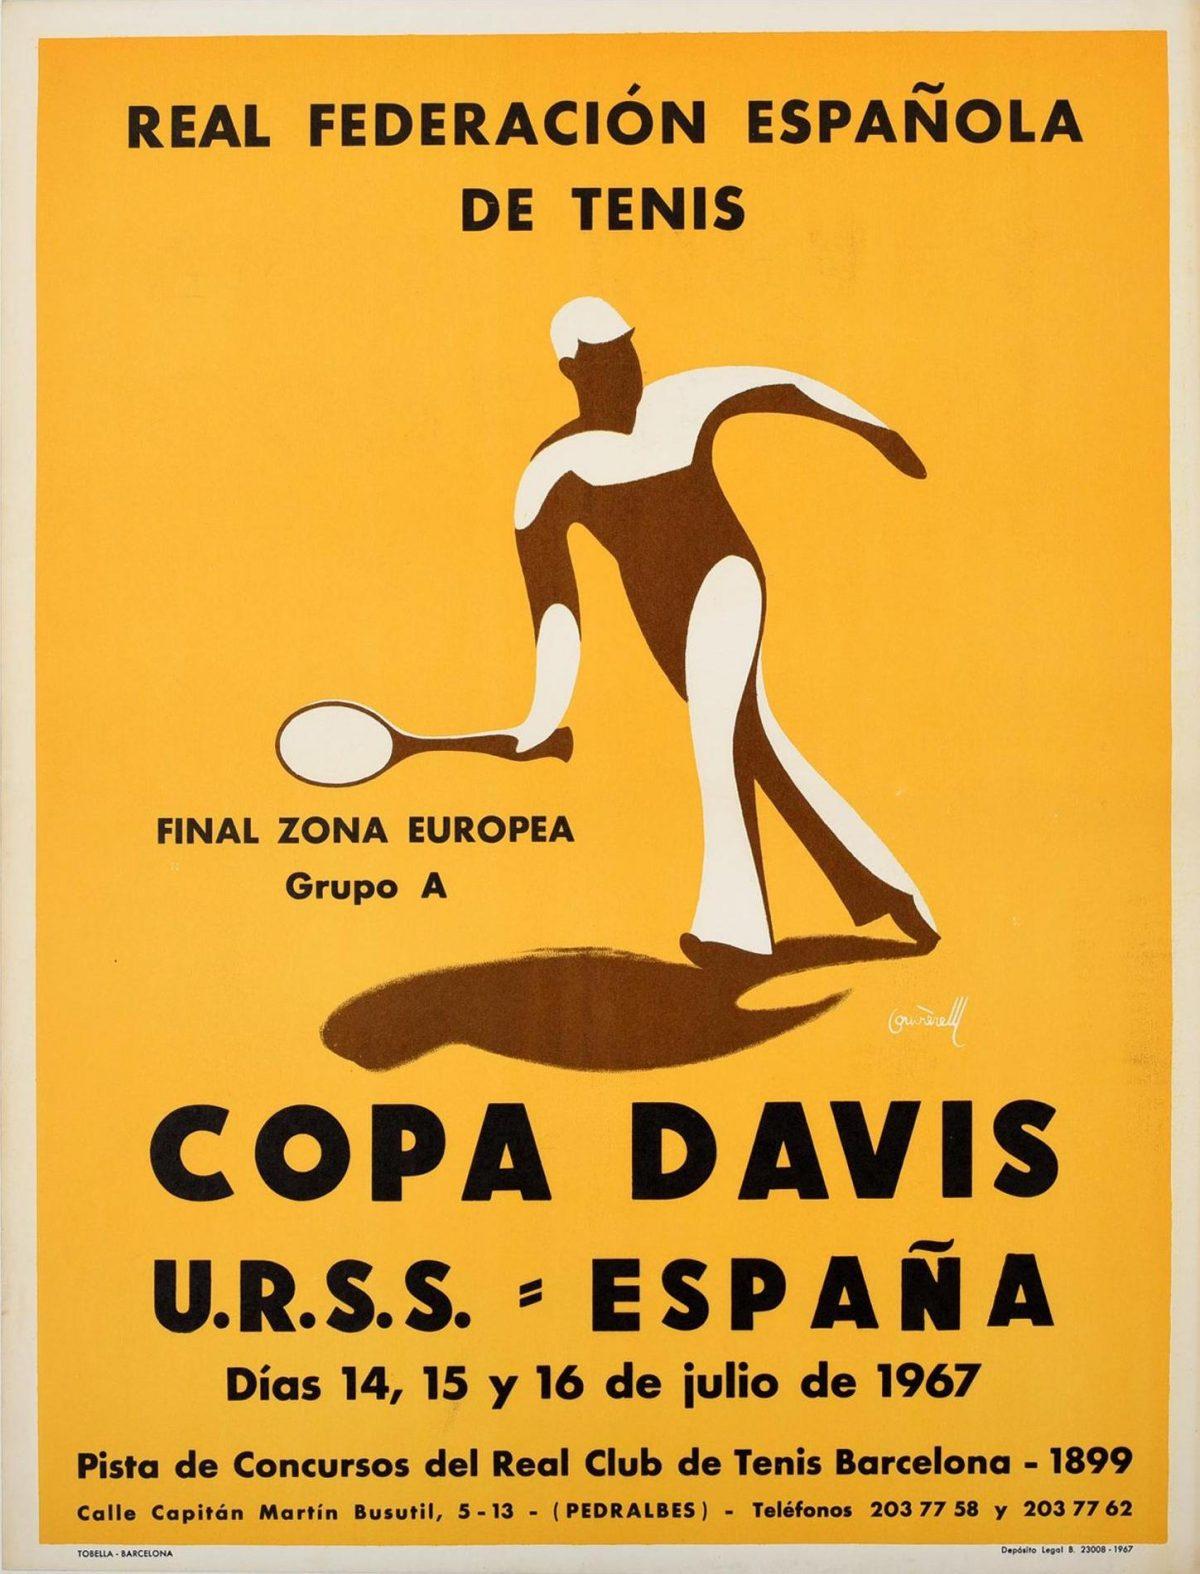 Oh Je Dis! Glorieux Vintage Tennis affiches 1895-1956